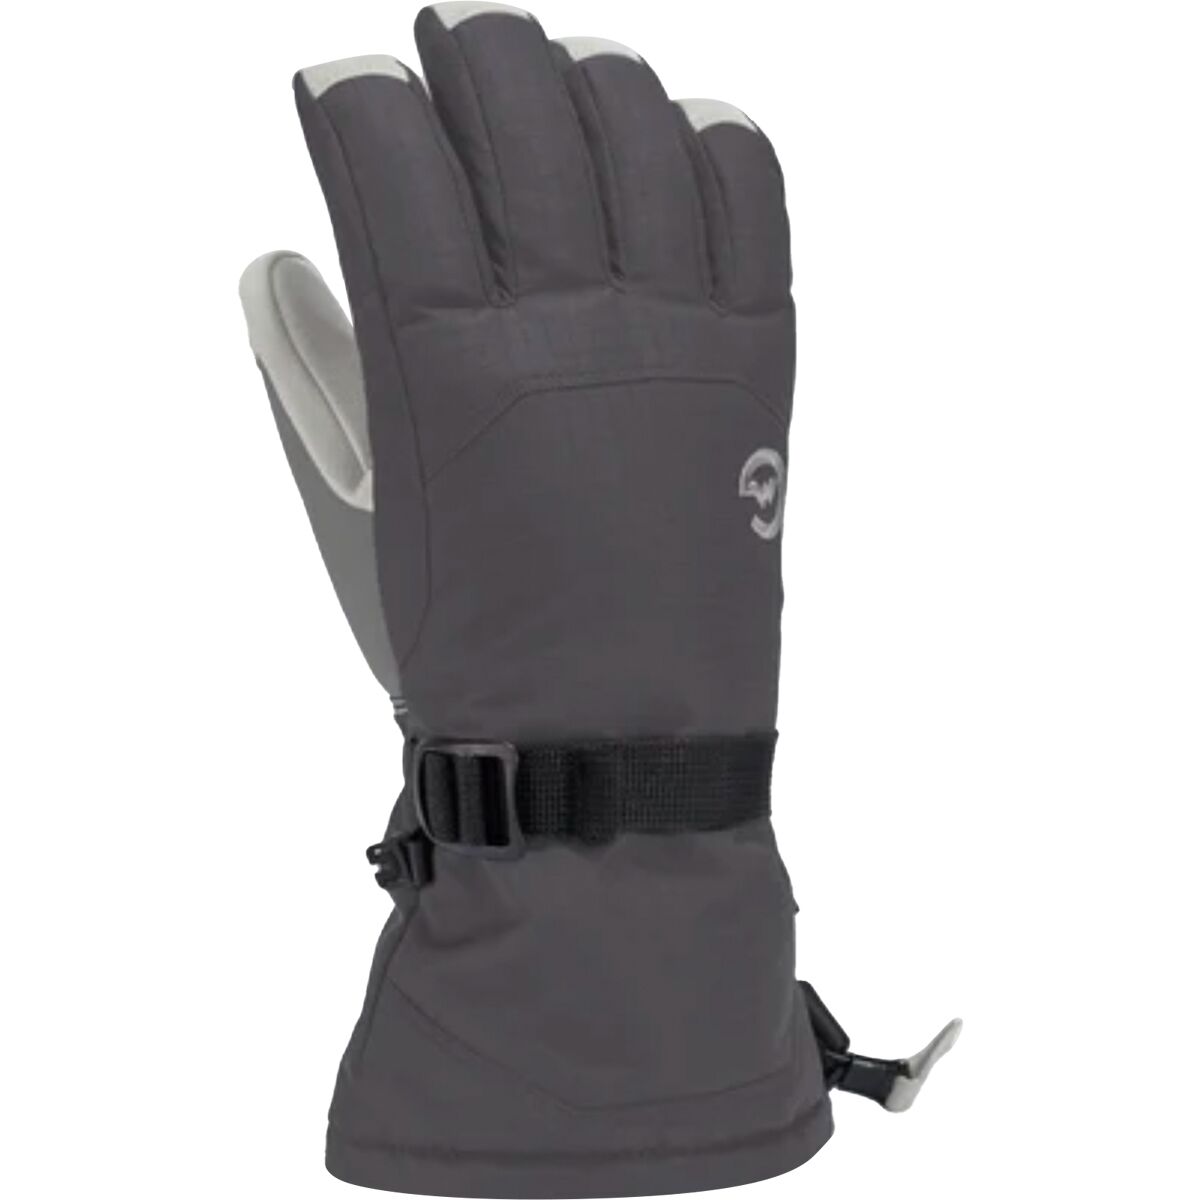 Gordini Foundation Glove - Men's Gunmetal Light Grey